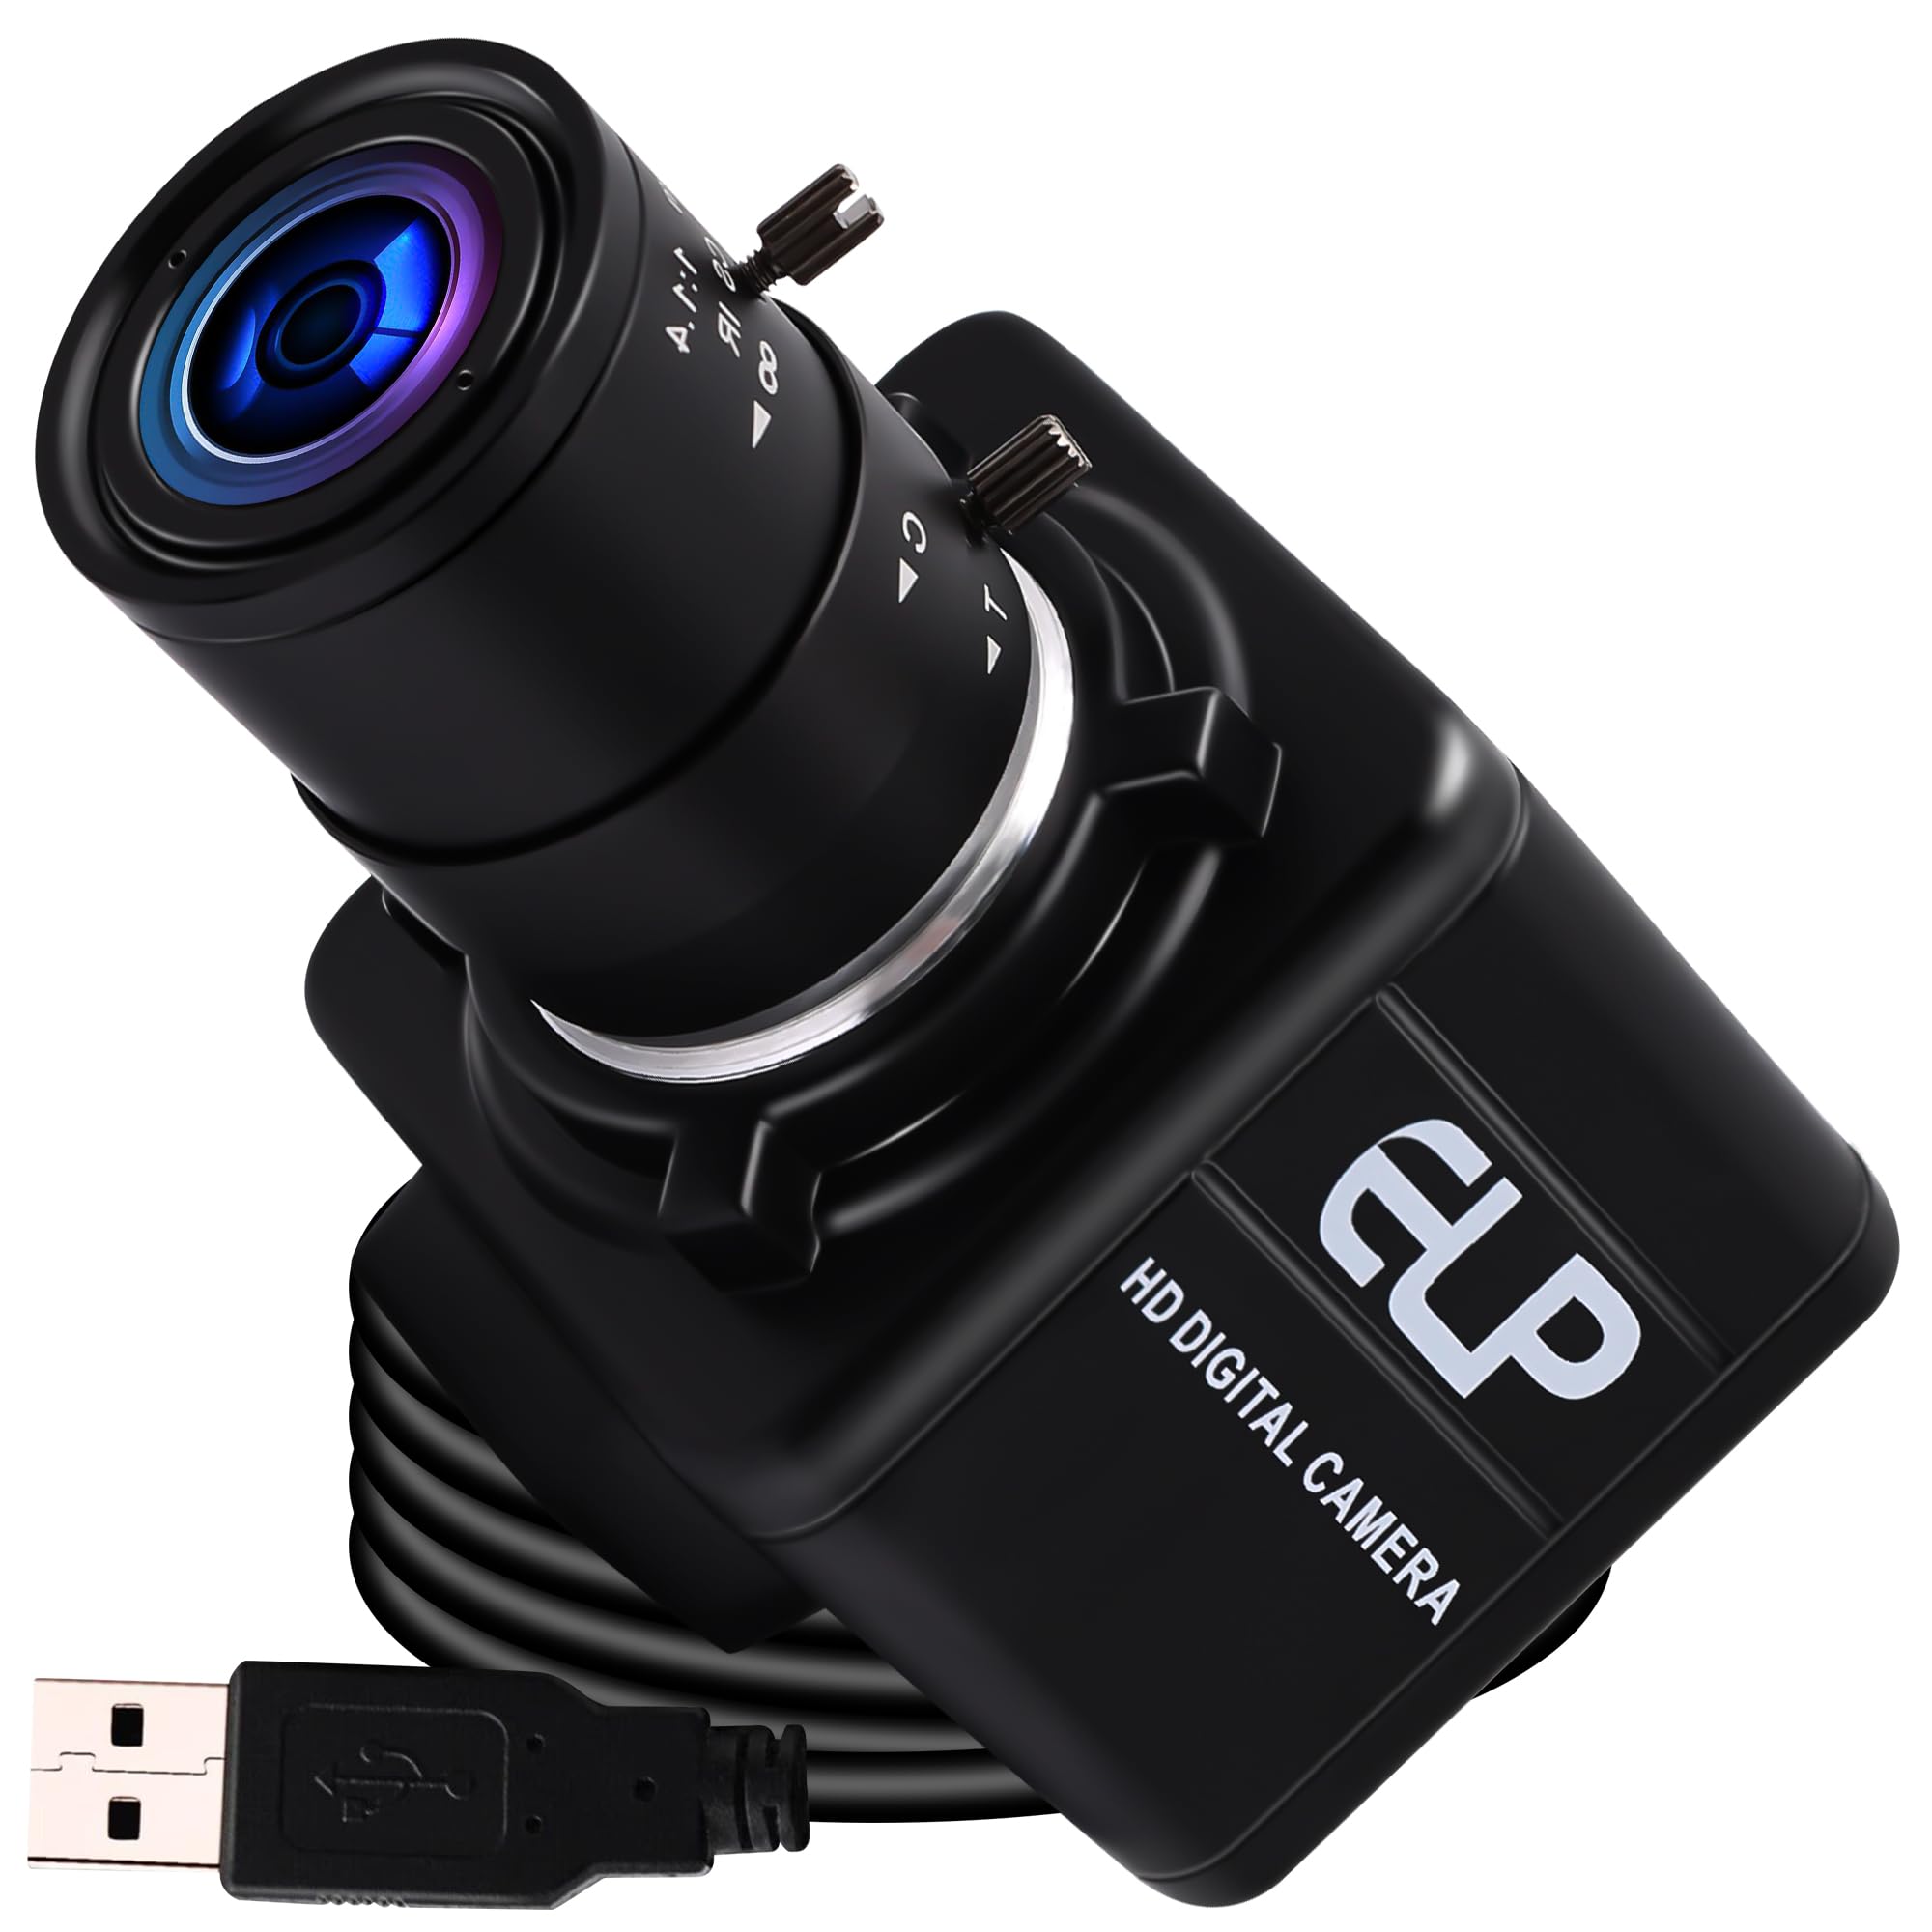 ELP ガンカメラ 2.8-12mm可変焦点レンズ USBウェブカメラ 100fps 光学4倍ズーム Webカメラ 200万画素 高速Webかめら 4倍ズームWeb会議用カメラ CMOS OV2710 1080P 30fpsズームカメラ Windows/L